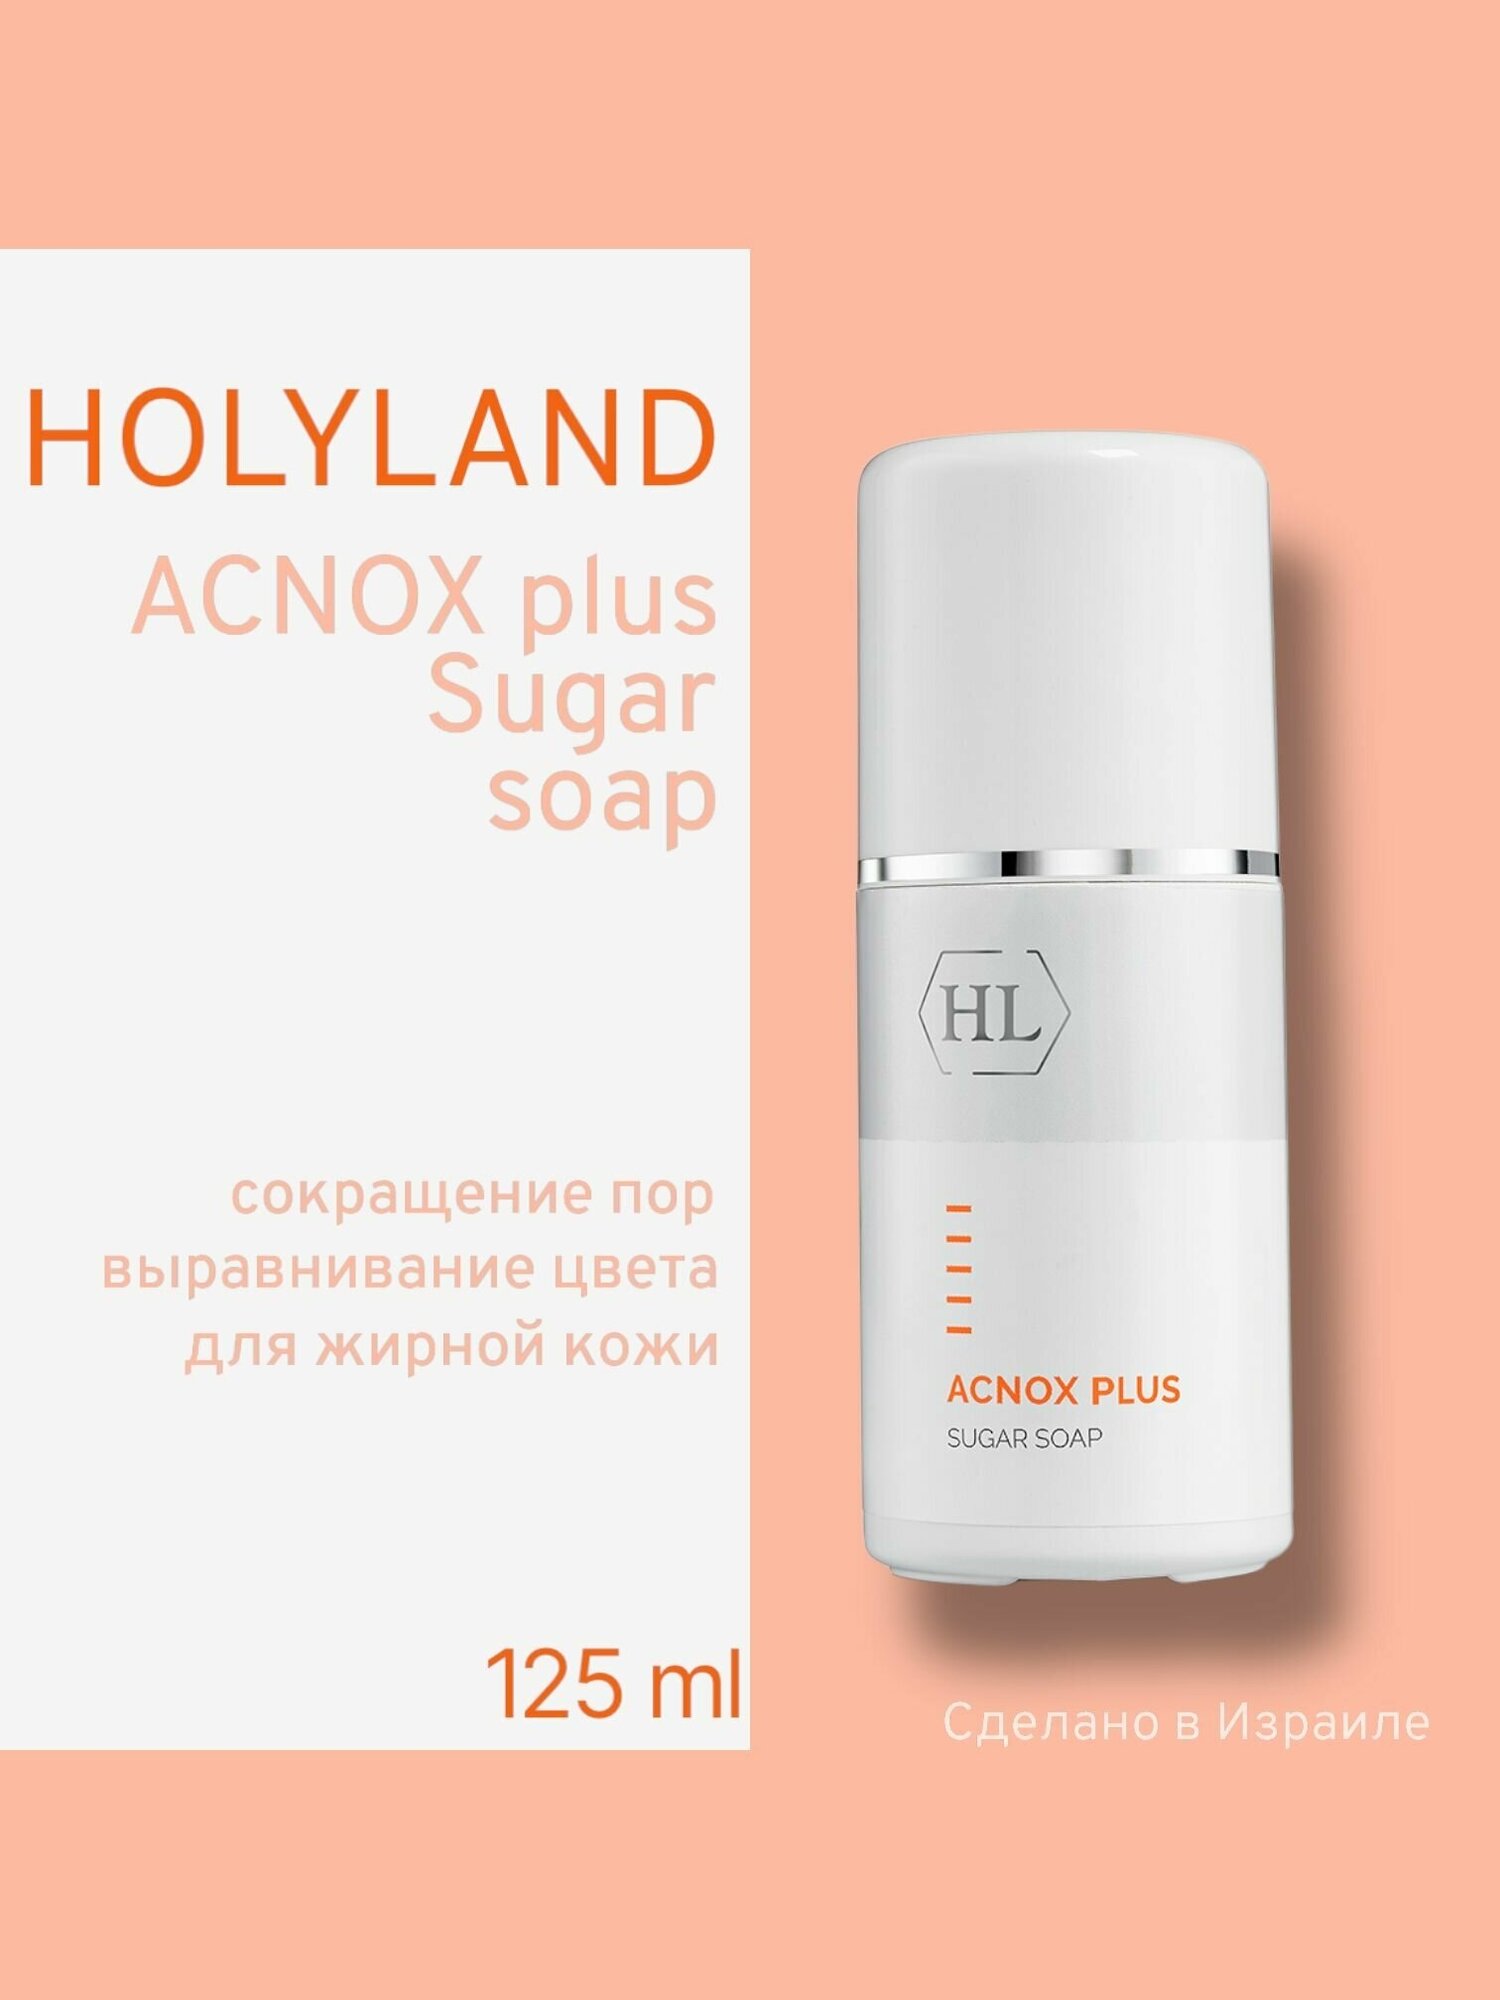 Holy land ACNOX PLUS SUGAR SOAP 125 мл (cахарное мыло 125 мл)